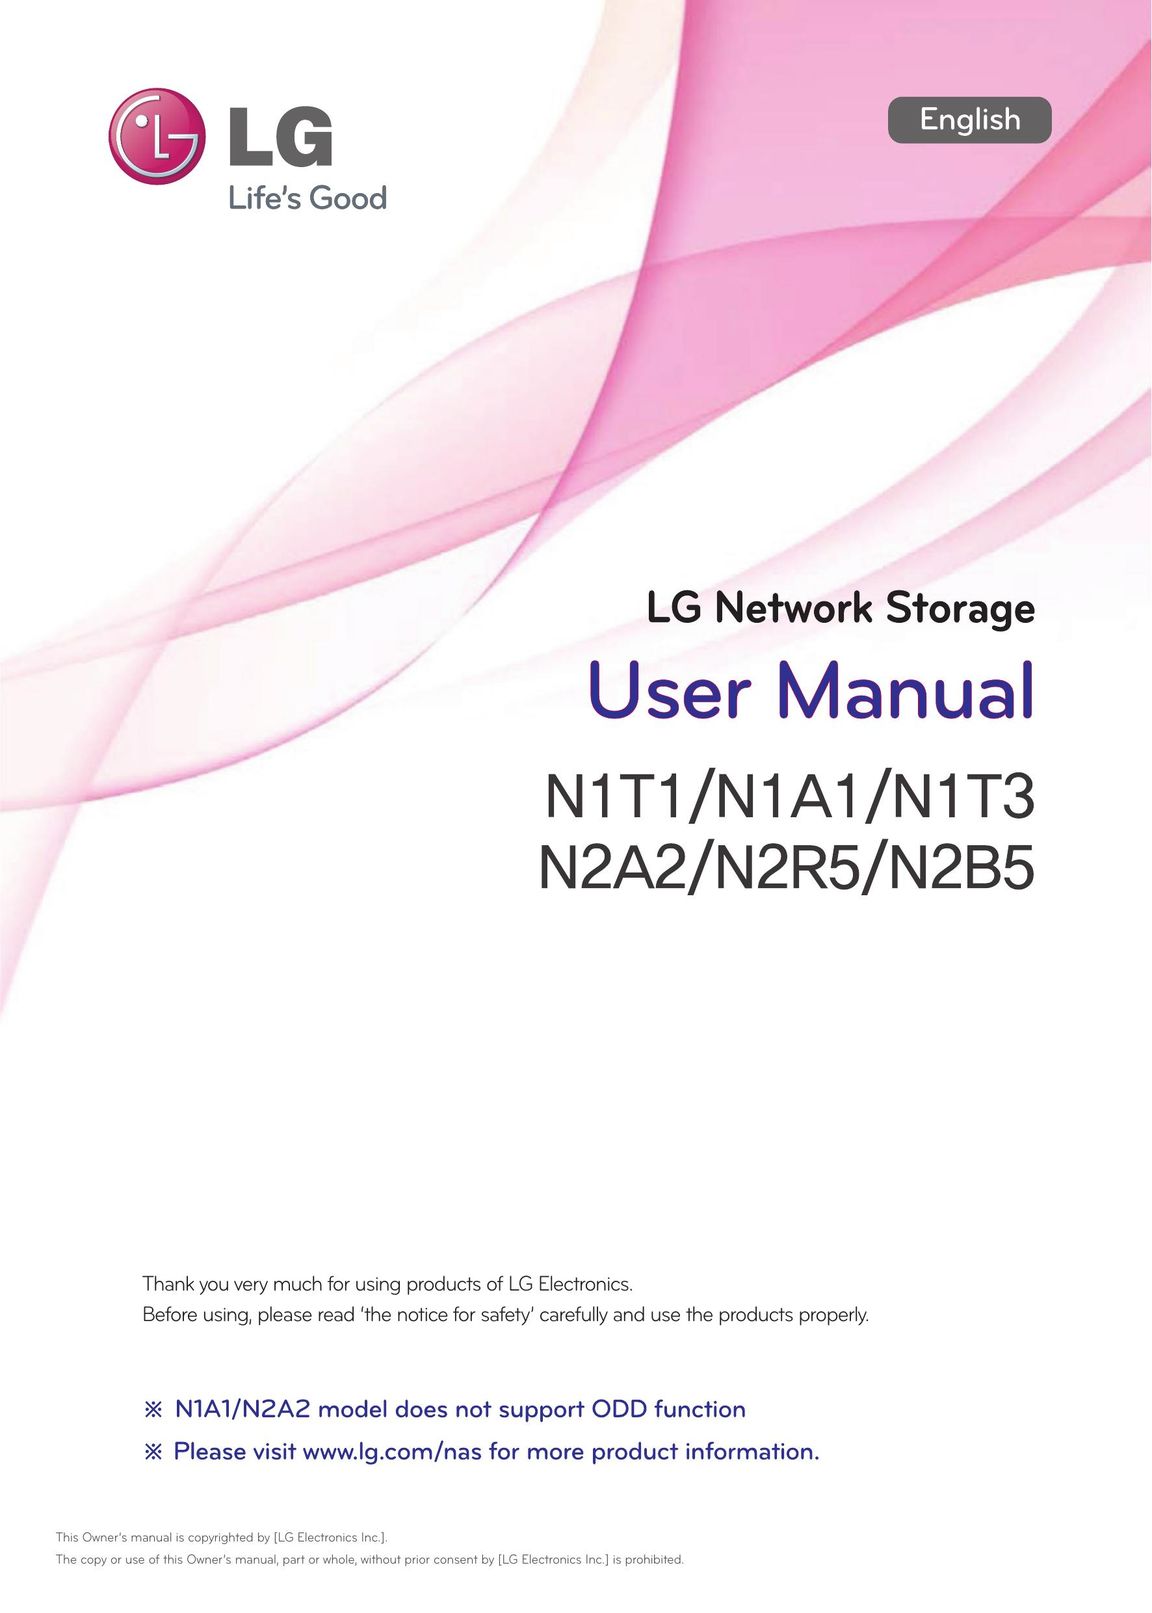 LG Electronics N2R5 Network Hardware User Manual